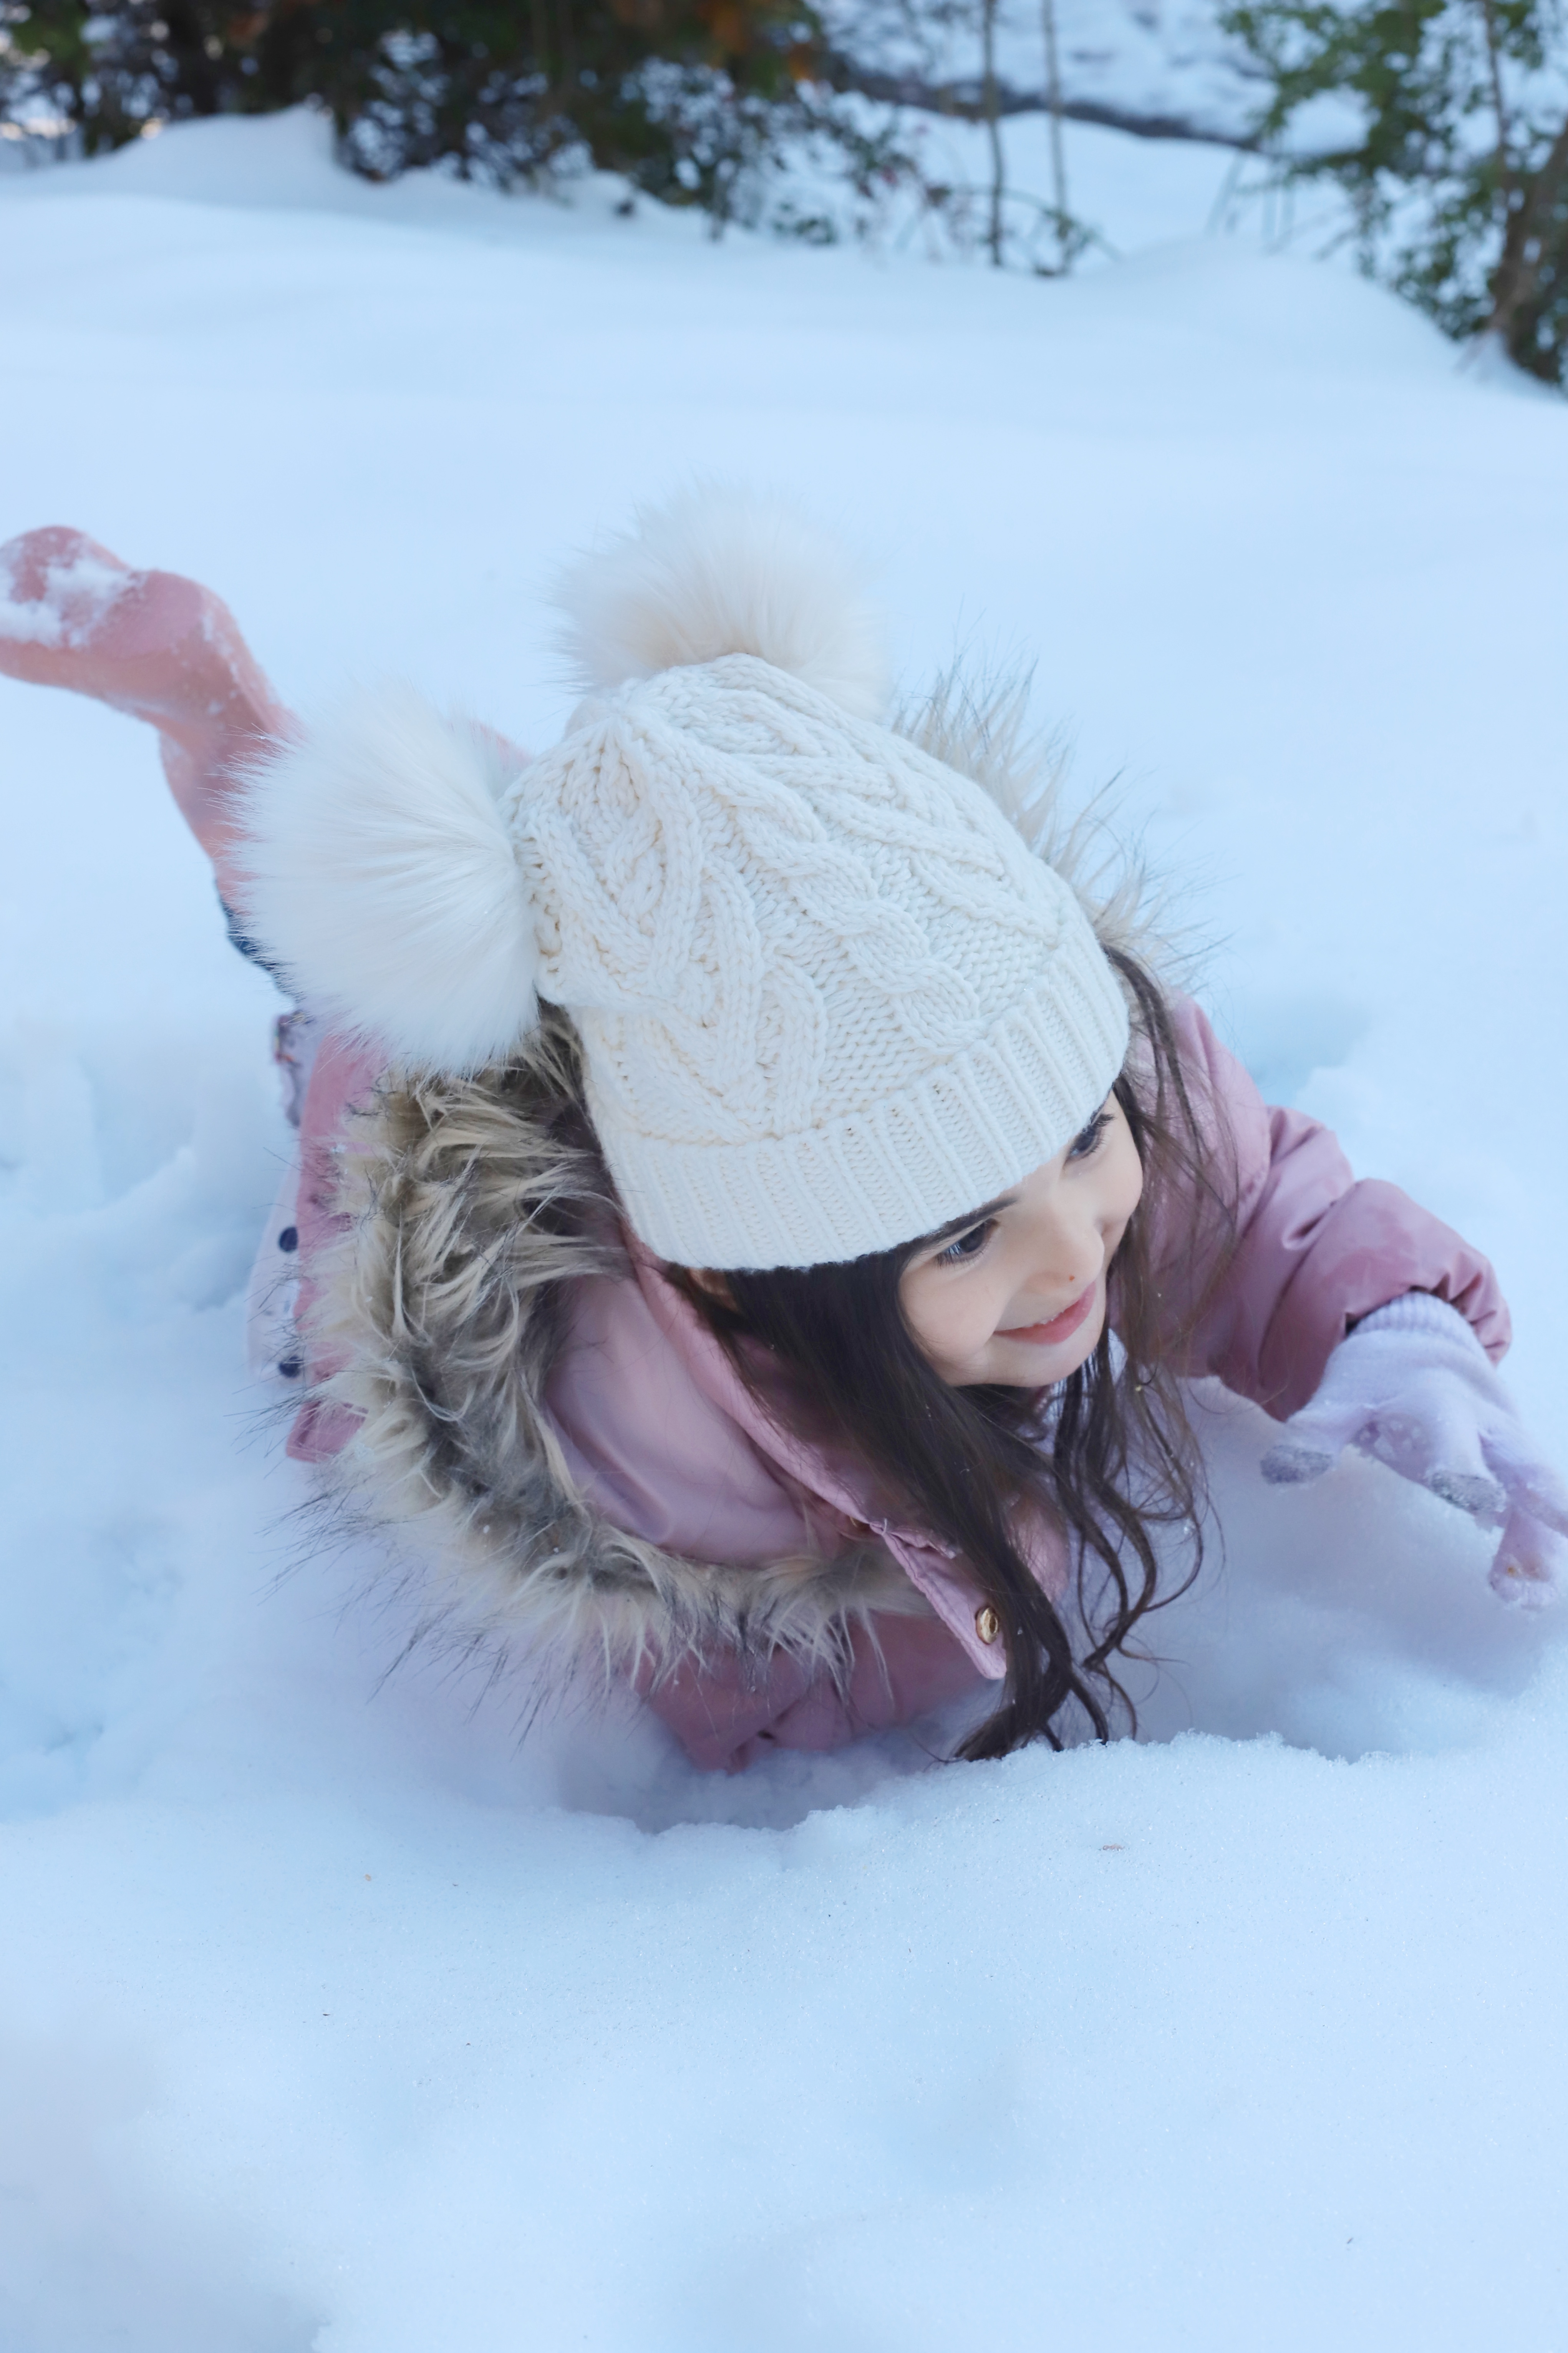 First Snow of the Season + a Fun Way to Paint Snow with Kids. Click through for the DIY. #snowpaint #snowday #snowactivities #snowfun #howtopaintsnow #snowspraypaint | glitterinc.com | @glitterinc